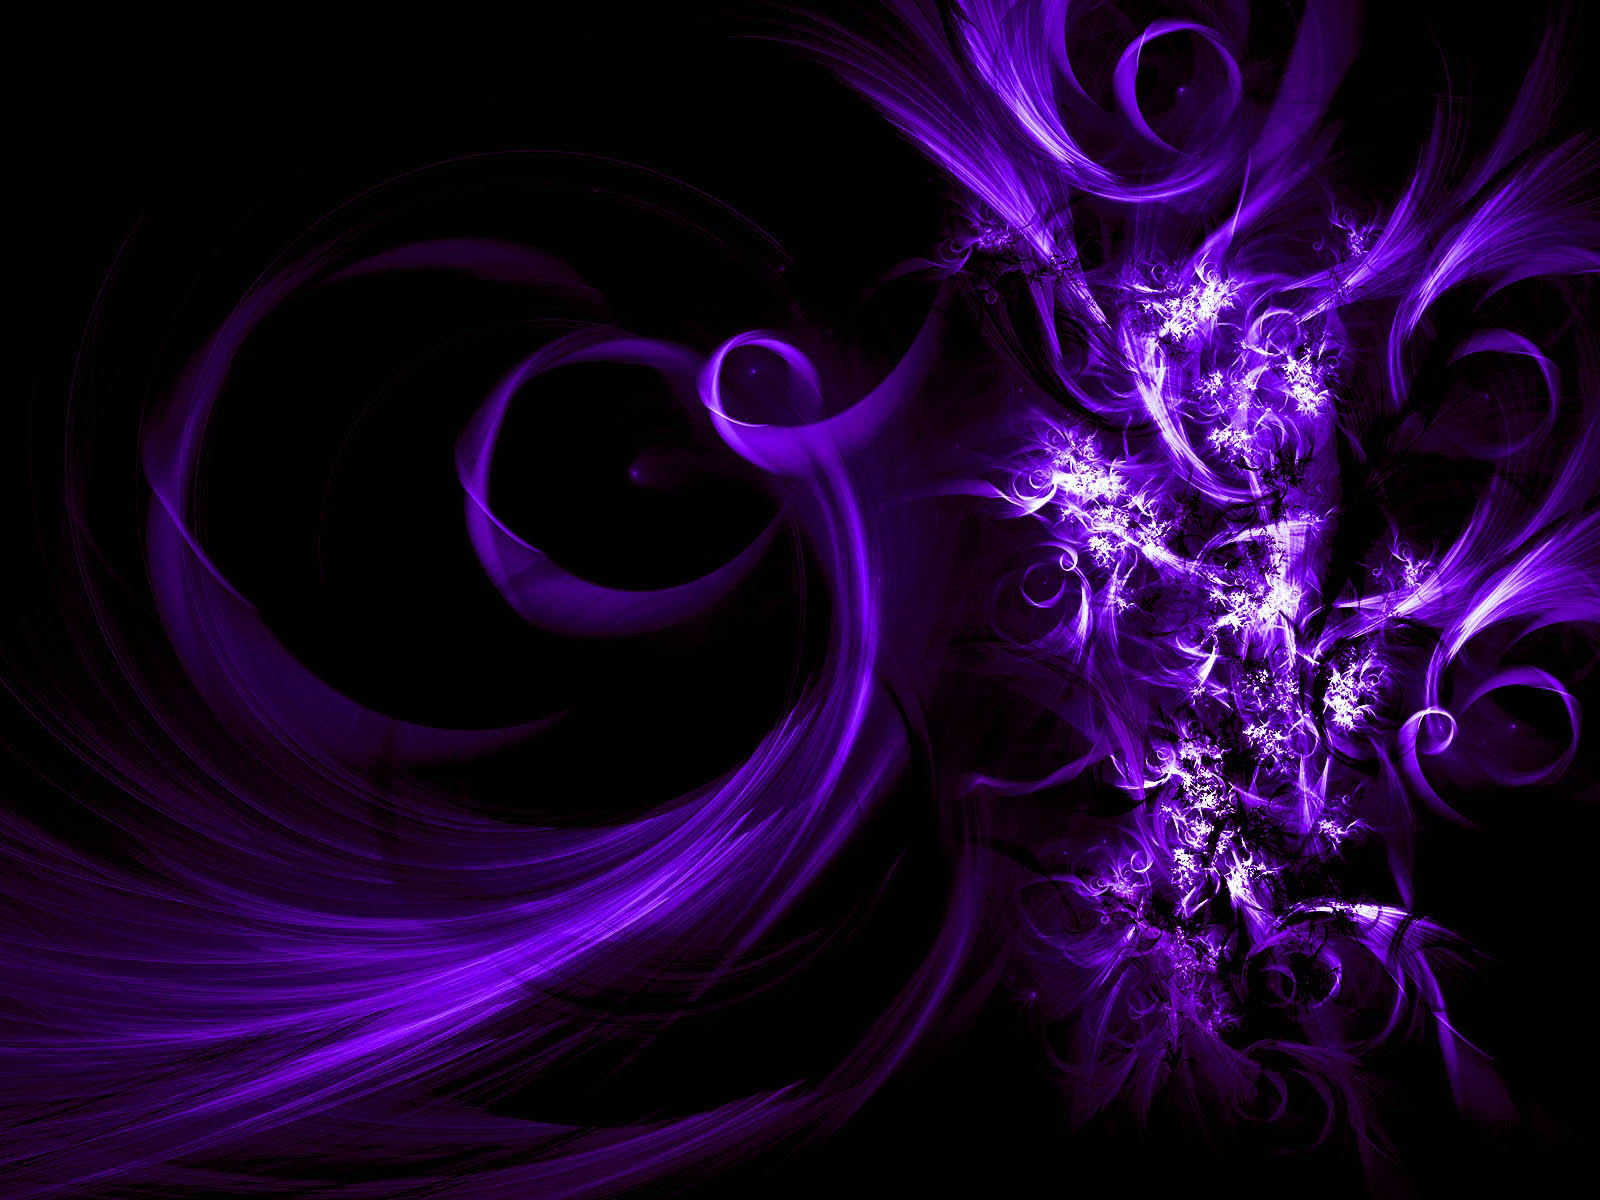 75+] Purple Abstract Backgrounds - WallpaperSafari